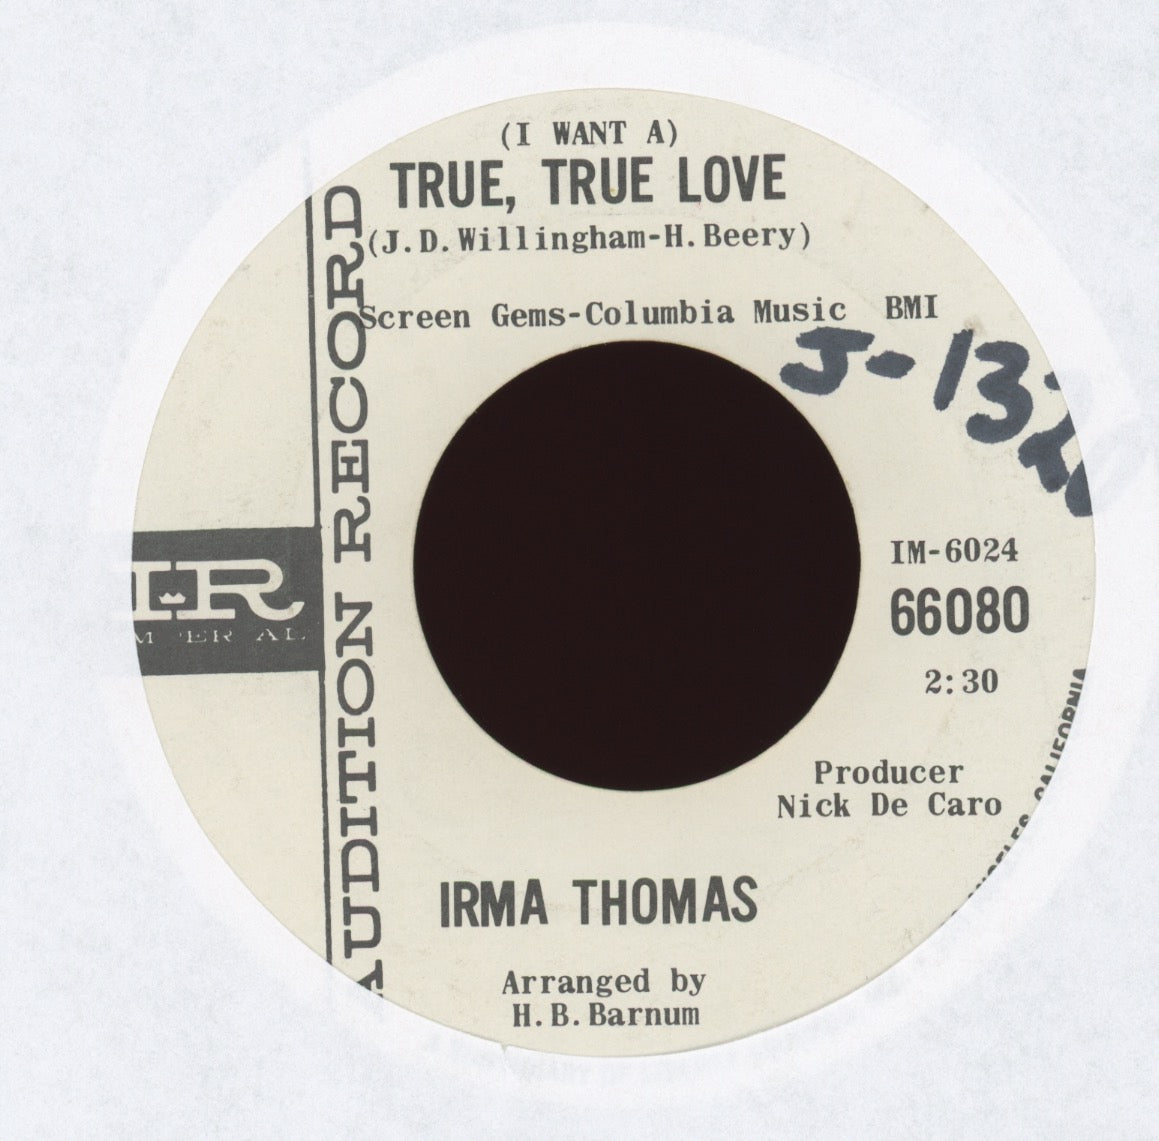 Irma Thomas - He's My Guy on Imperial Promo